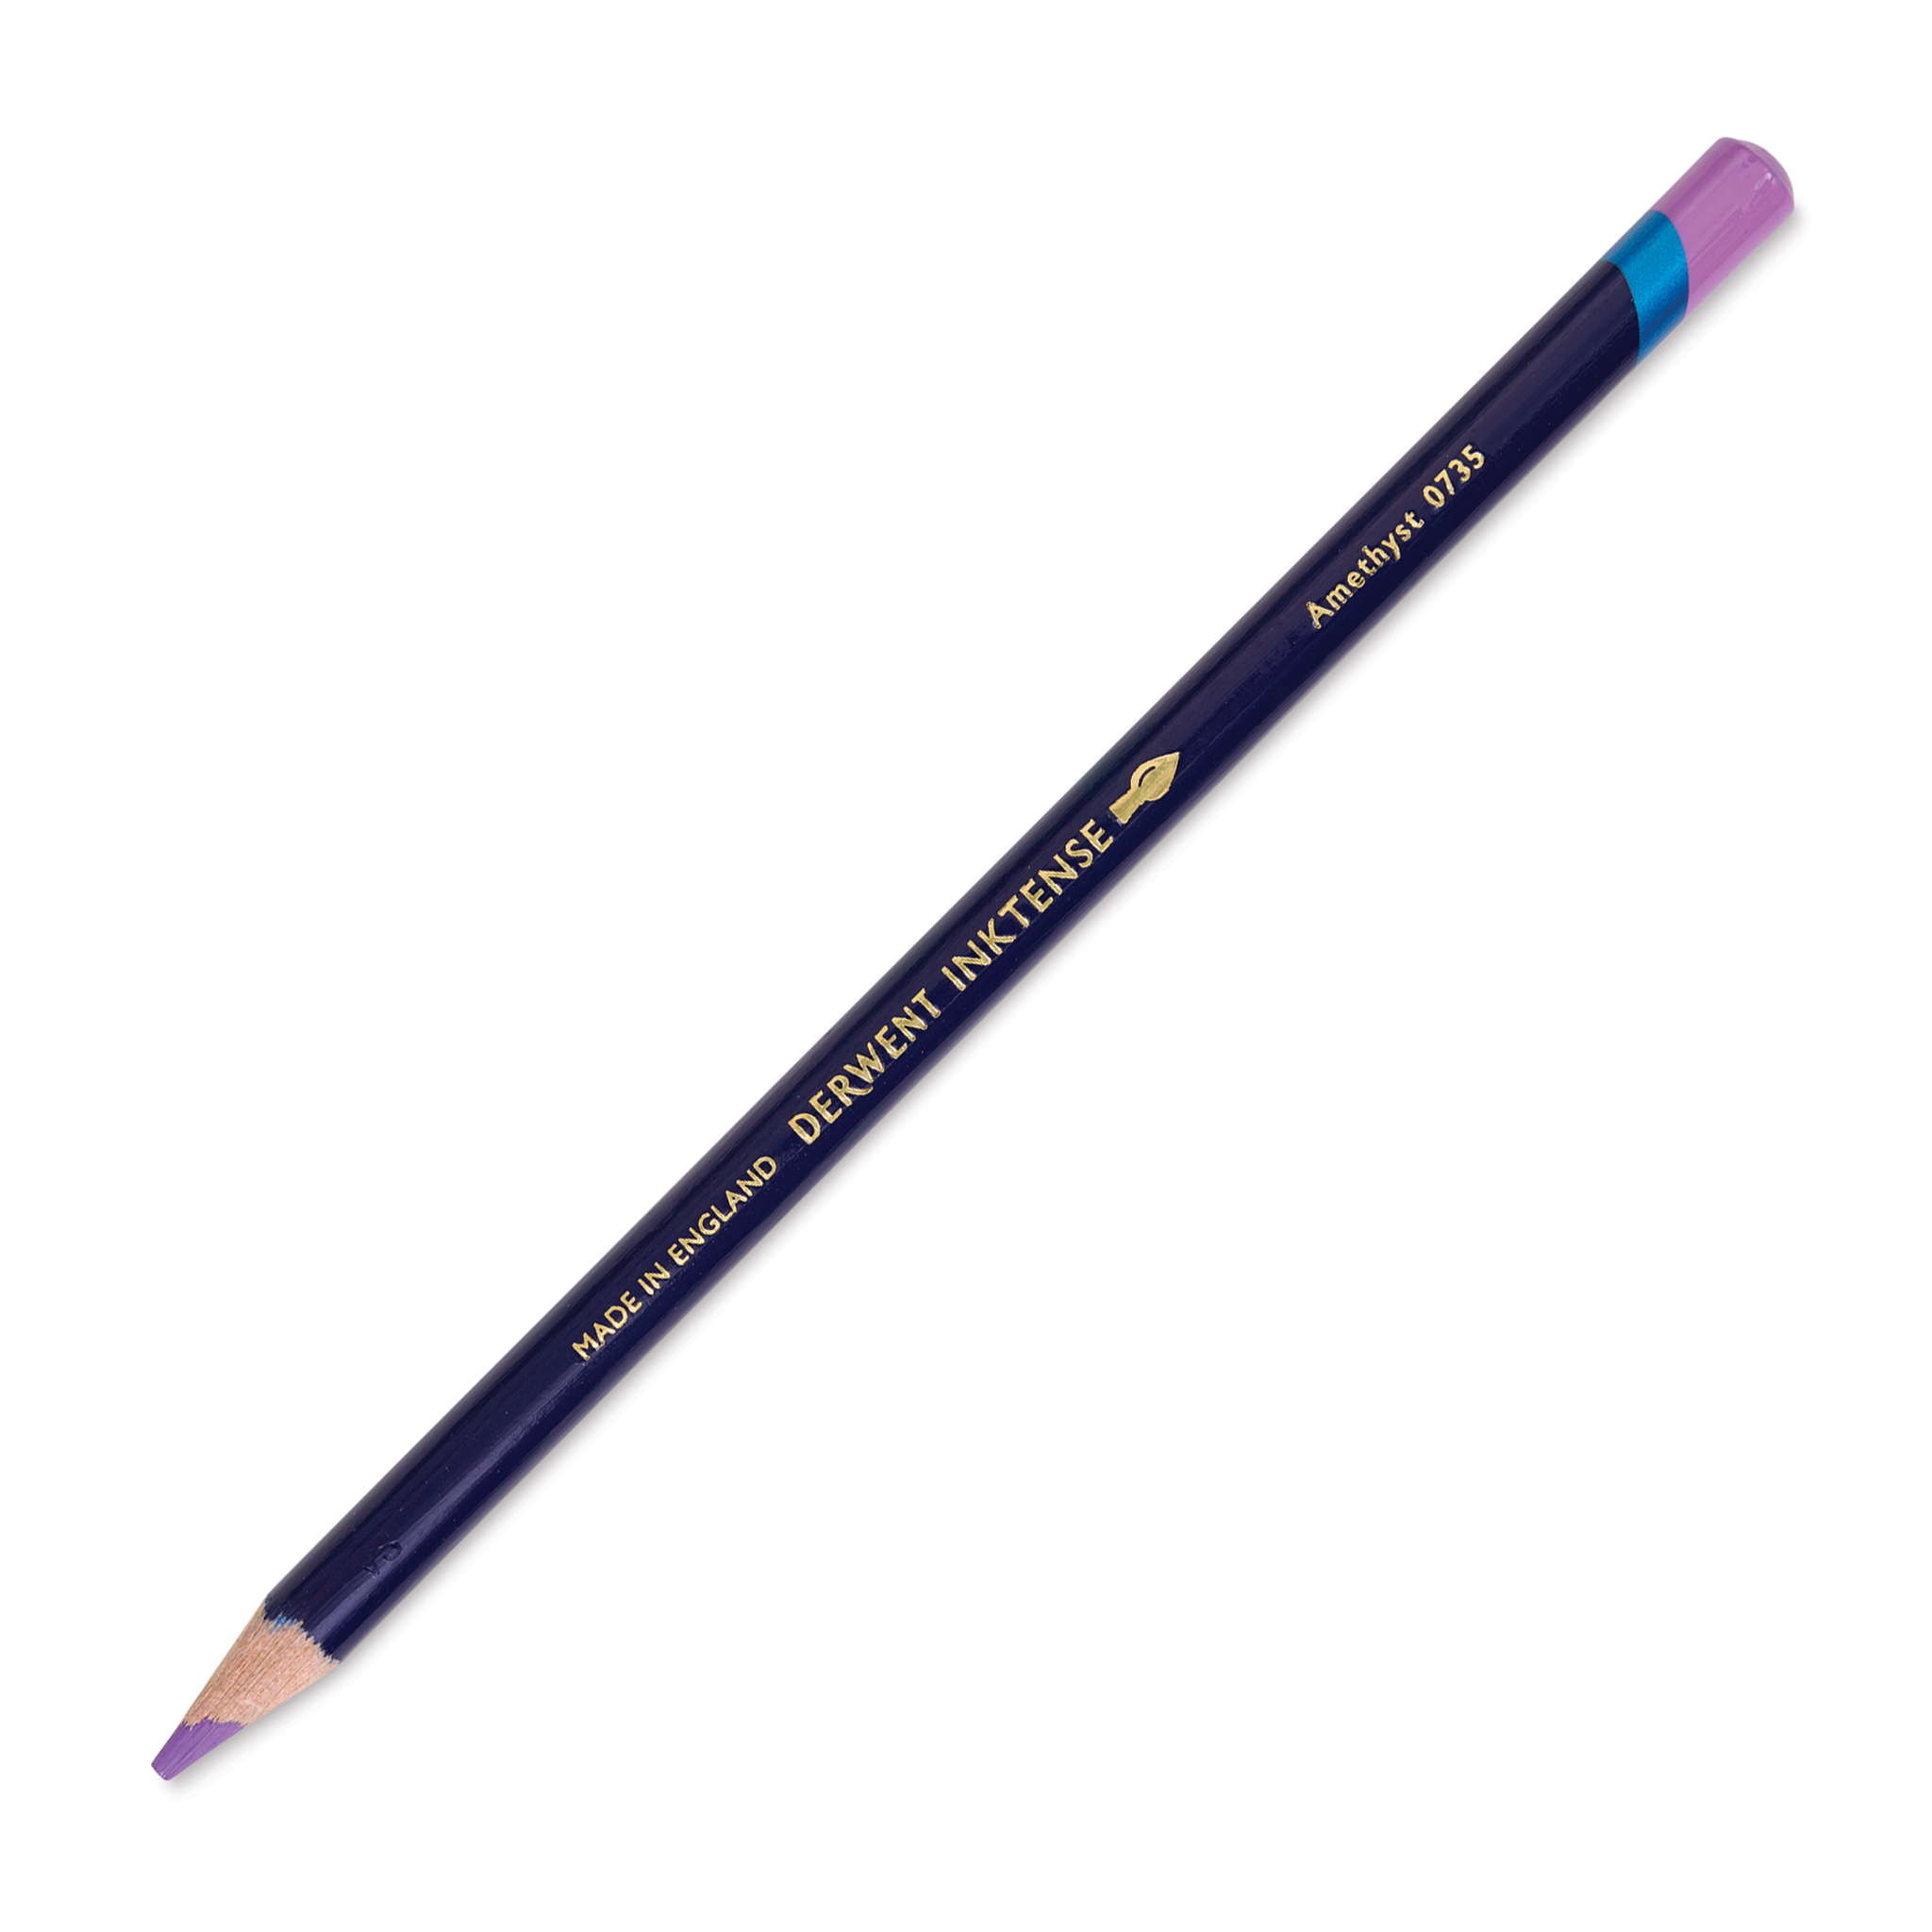 Derwent Inktense Watersoluble Ink Pencils – Rileystreet Art Supply